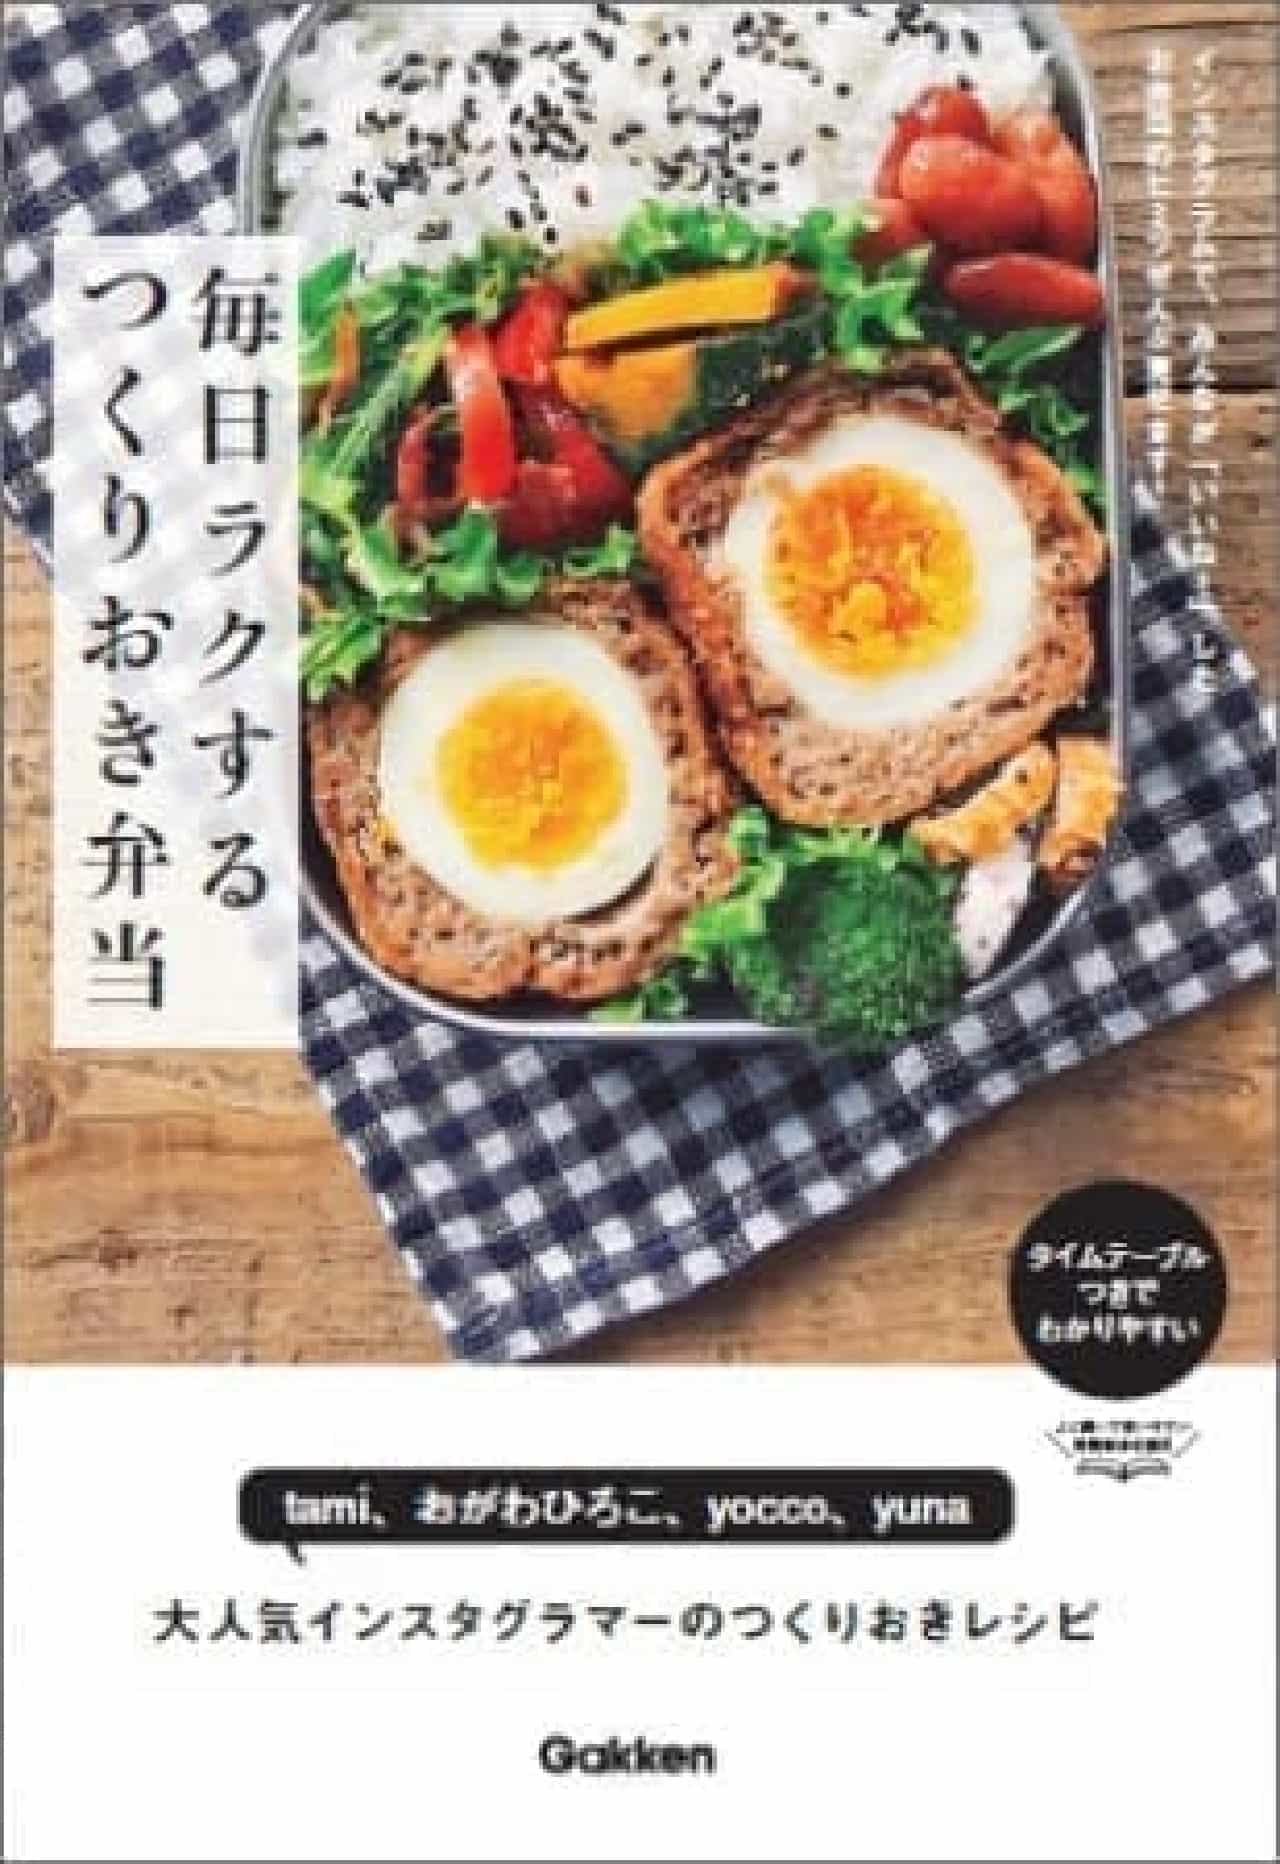 Gakken Plus "Easy daily lunch box"